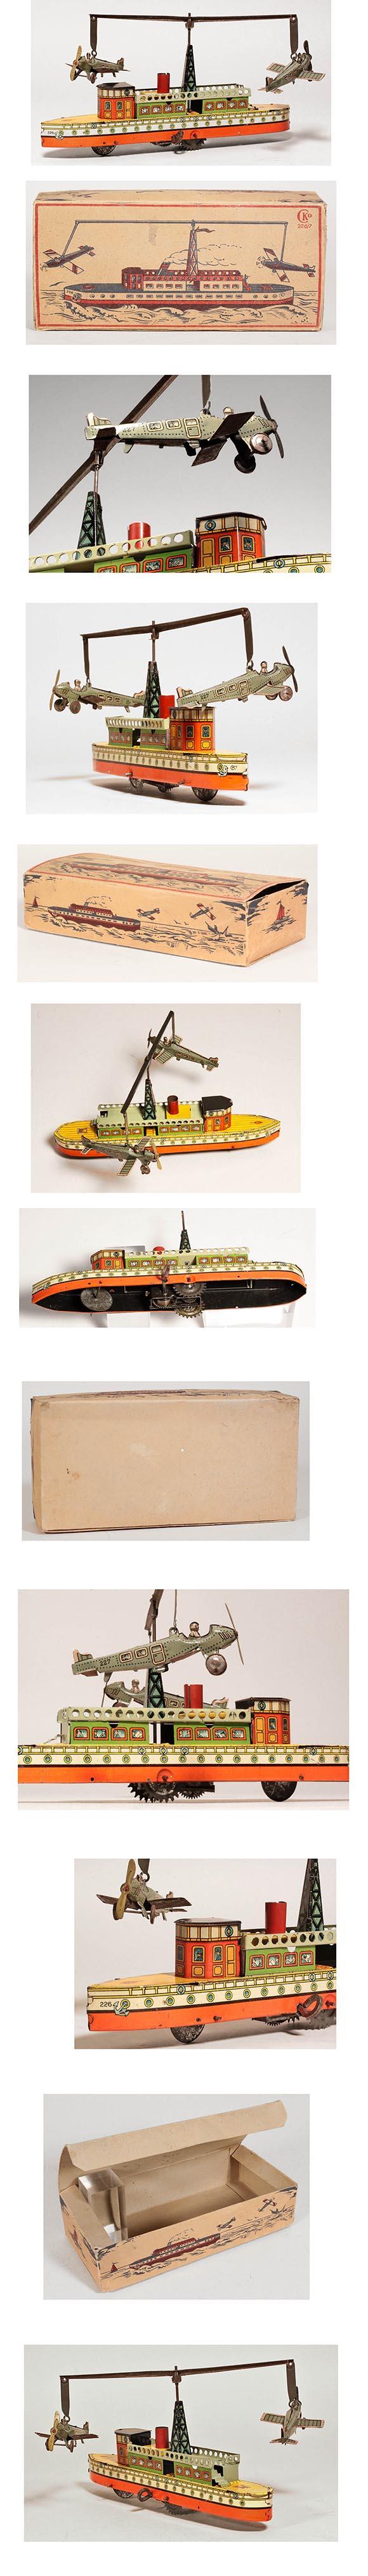 1926 Kellerman 226/7, Monoplanes Circling Ship in Original Box